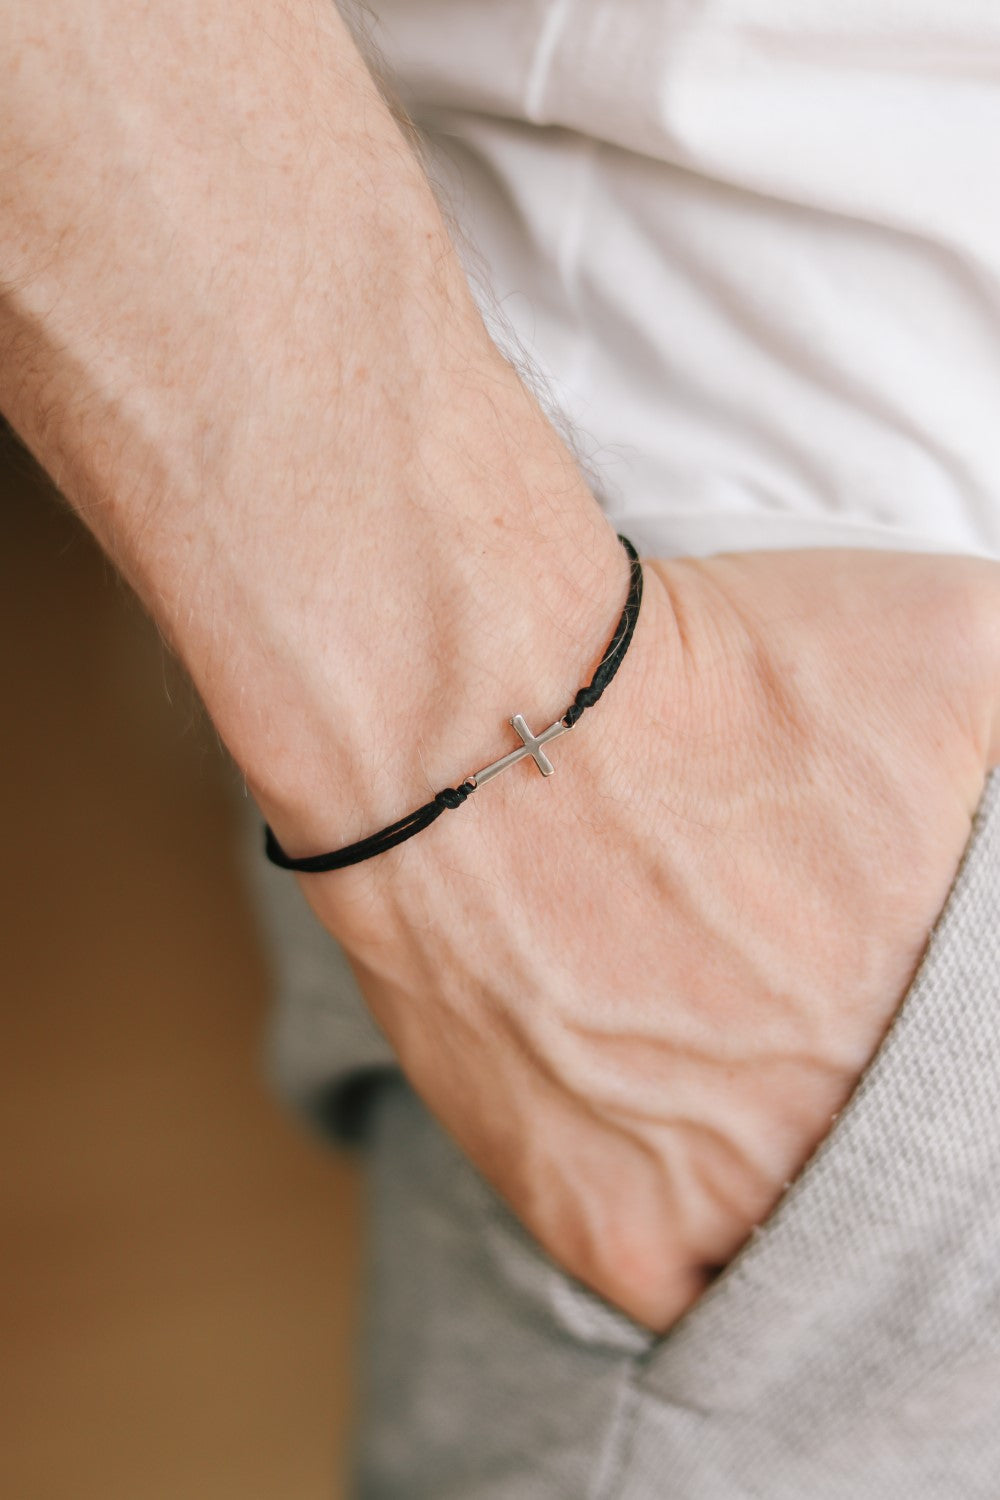 Buy jewel string cross bracelet with black cord adjustable for girl boy men  women(unisex) at Amazon.in